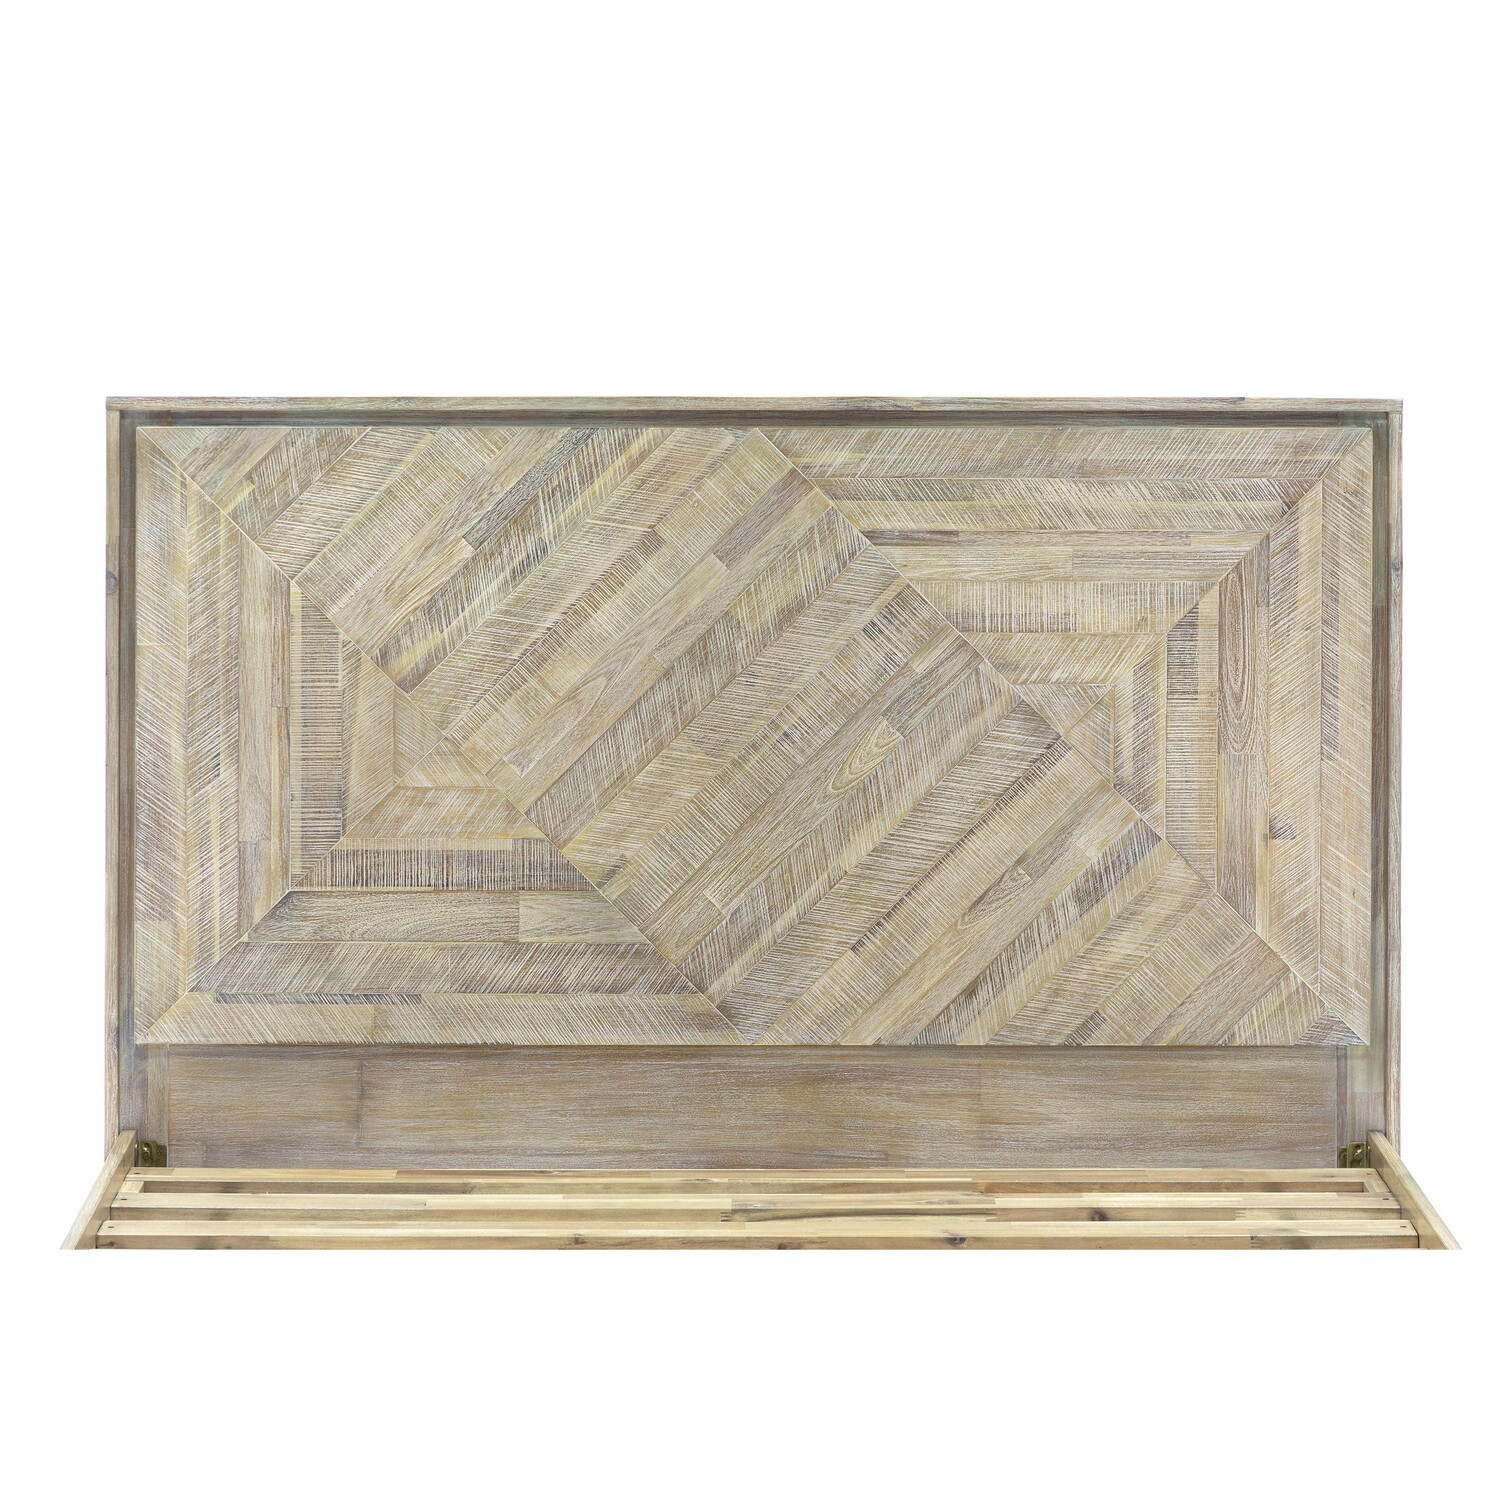 Benjara Rexi Acacia Wood King Platform Bed Frame, Metal Sled Base, Natural Brown - image 4 of 6